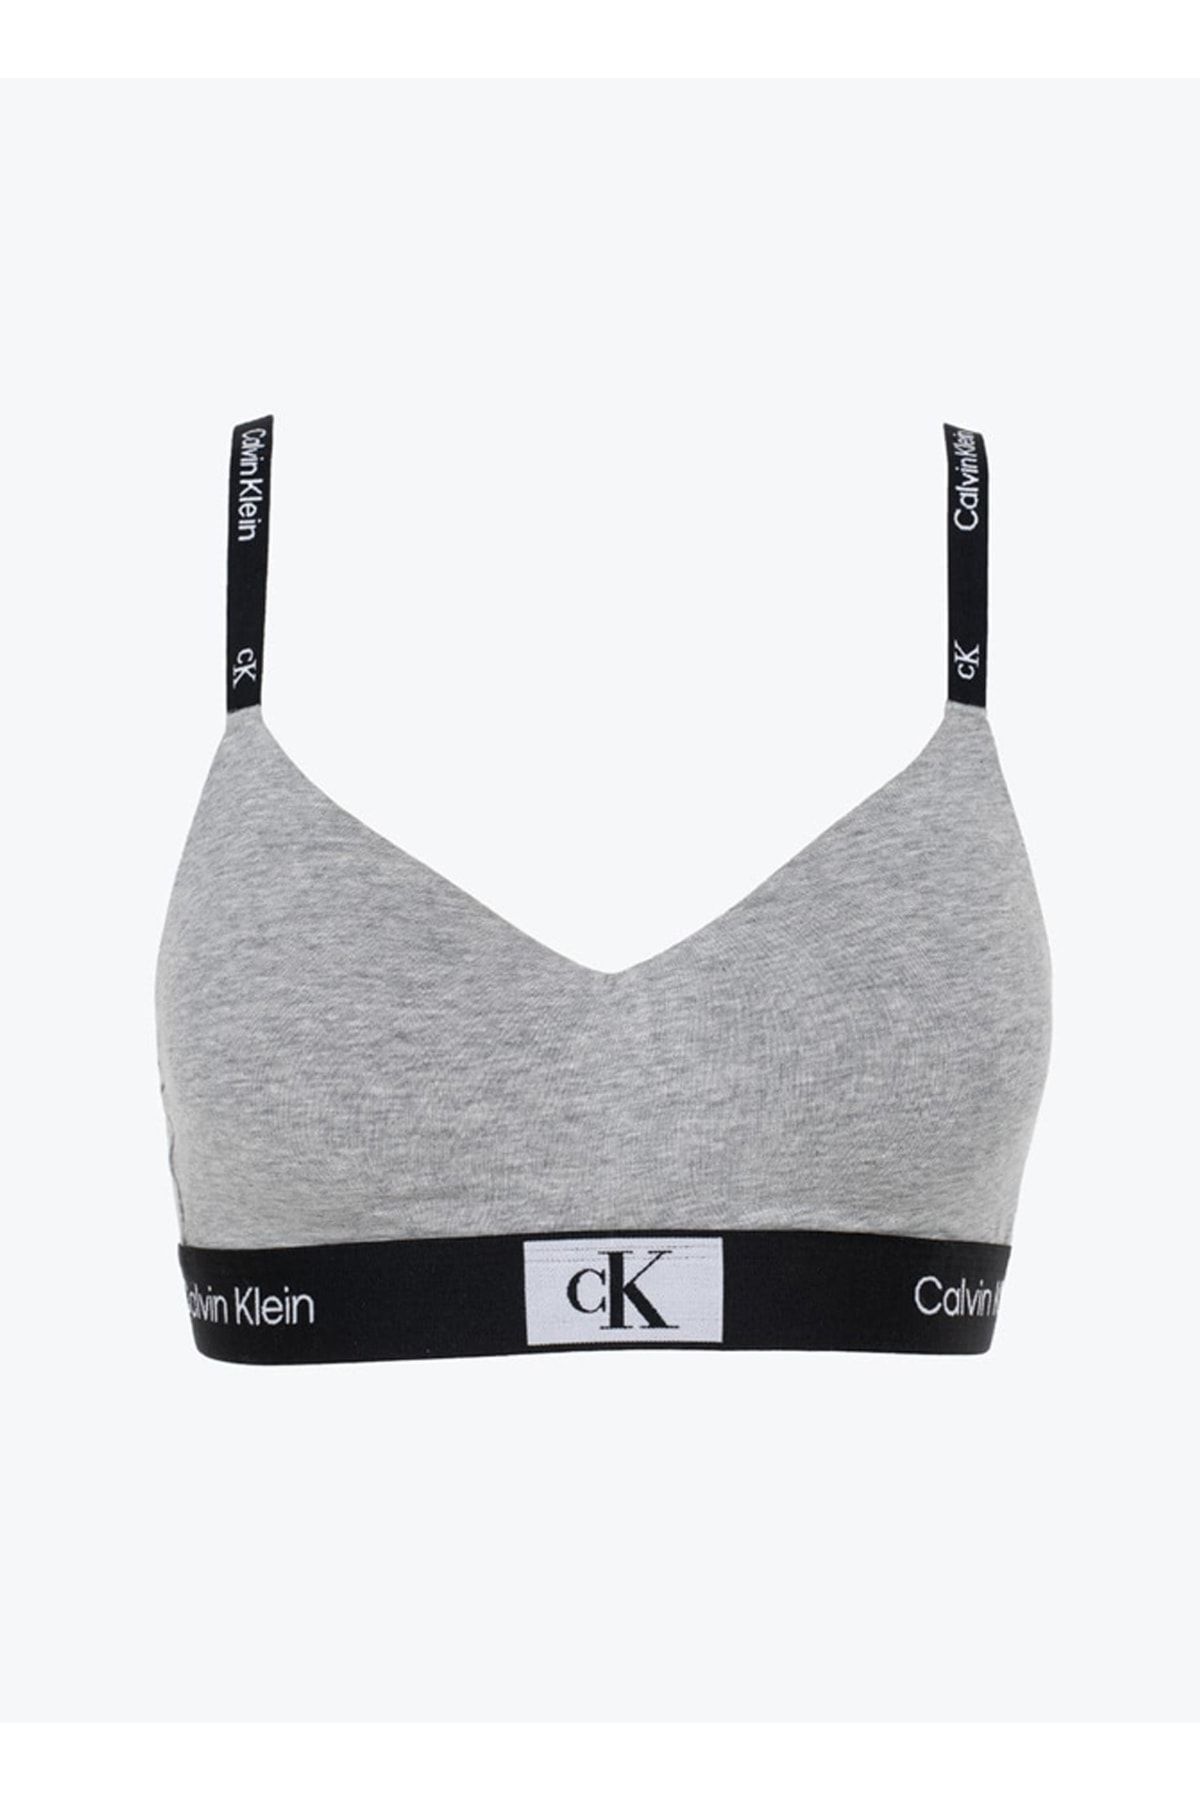 Calvin Klein Bra - Gray - Licensed - Trendyol